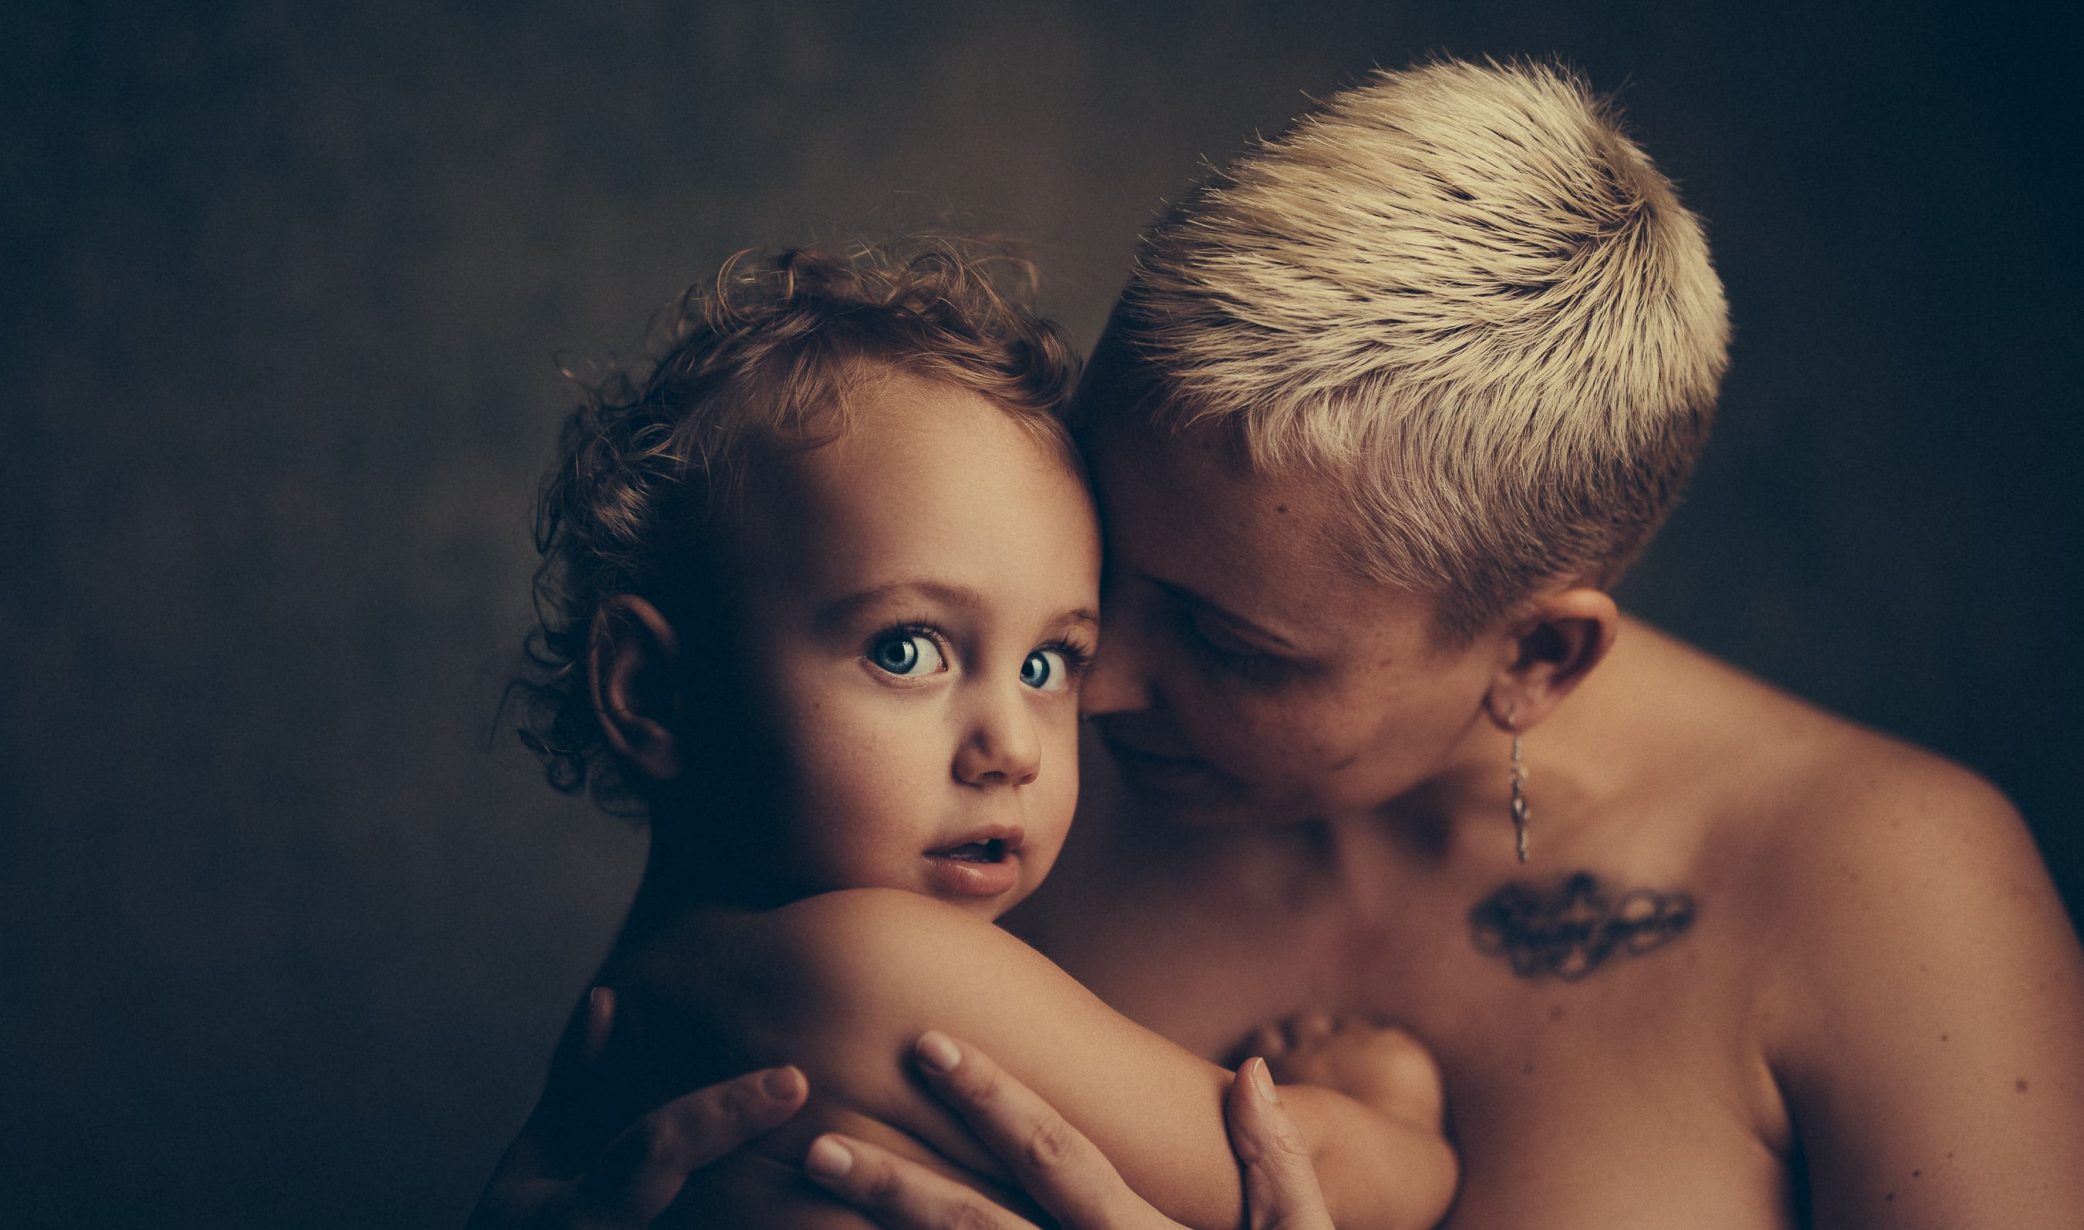 голая женщина с ребенком фото и видео фото 29